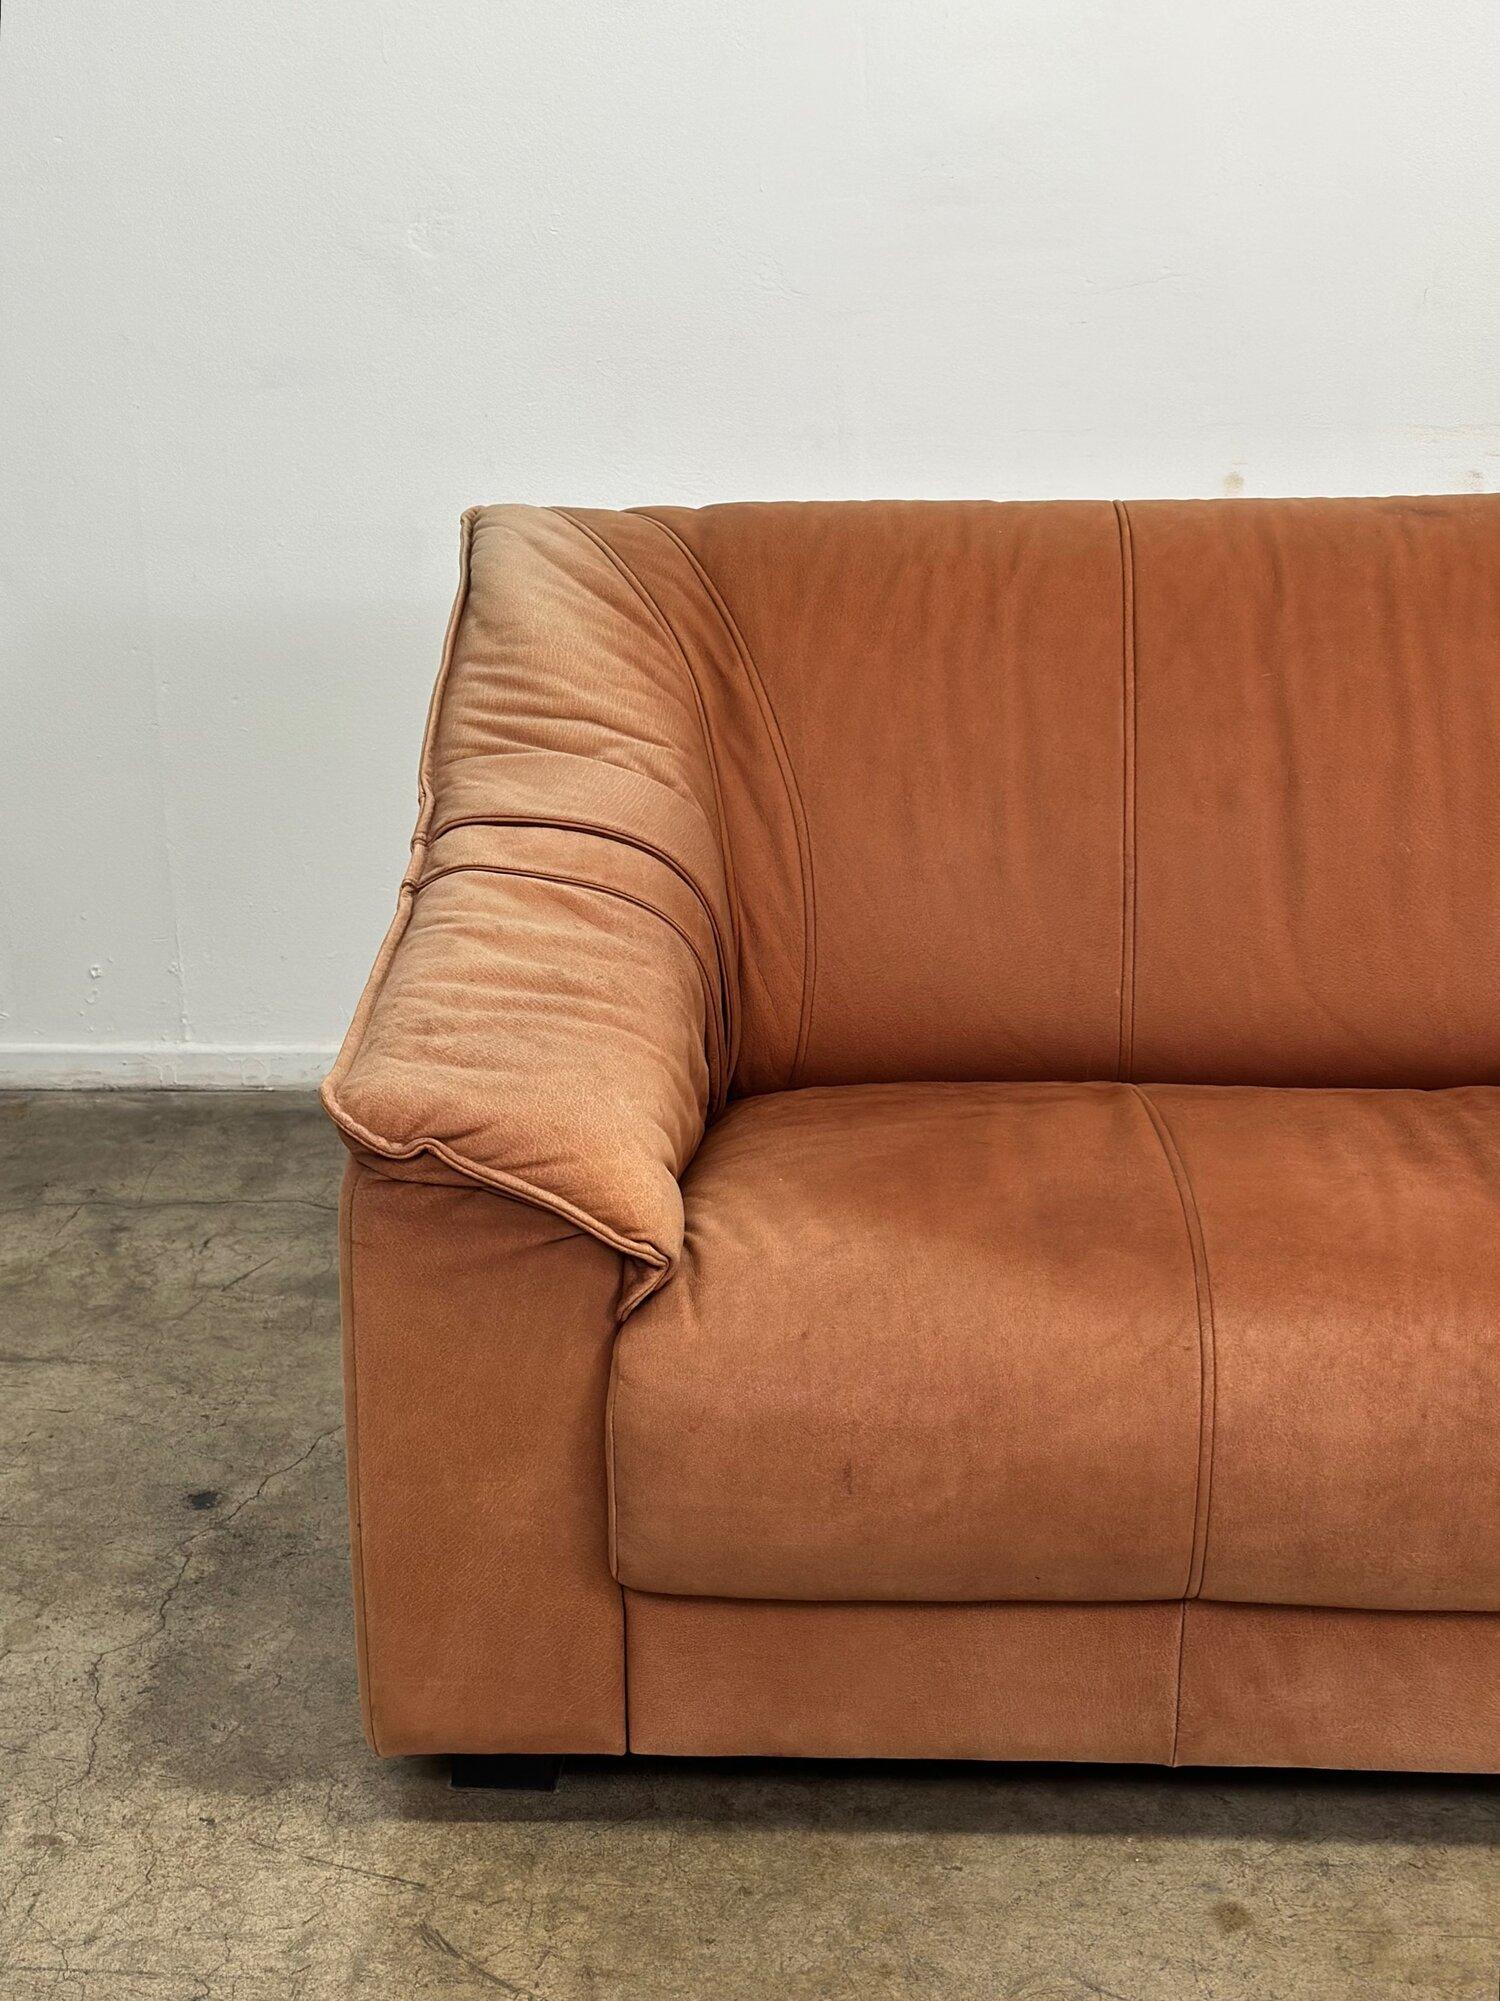 Ikea Halland post modern patchwork sofa 4